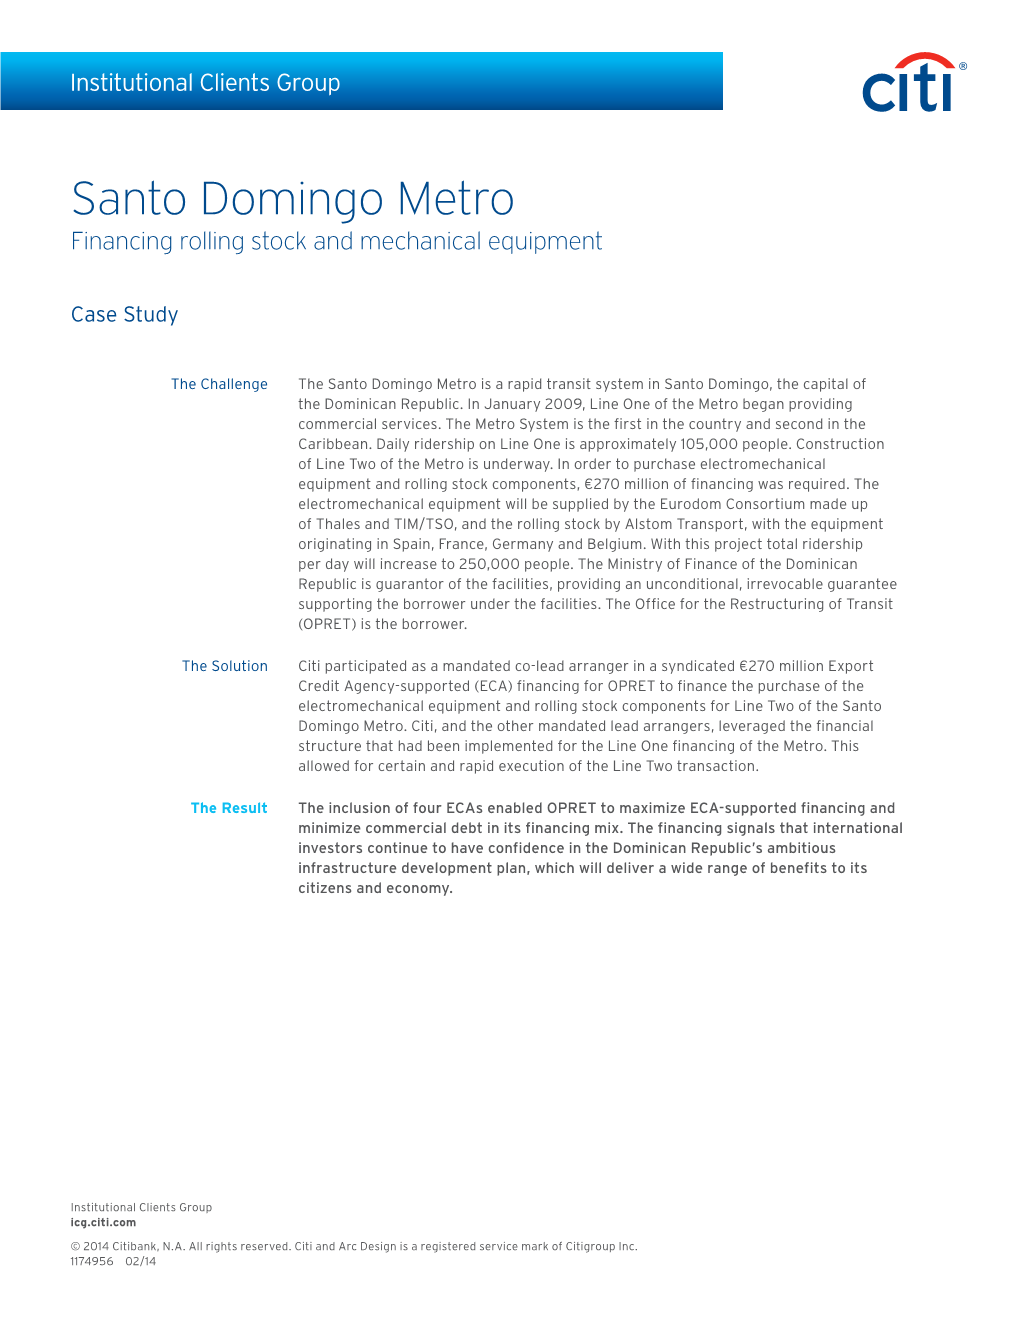 Santo Domingo Metro Financing Rolling Stock and Mechanical Equipment